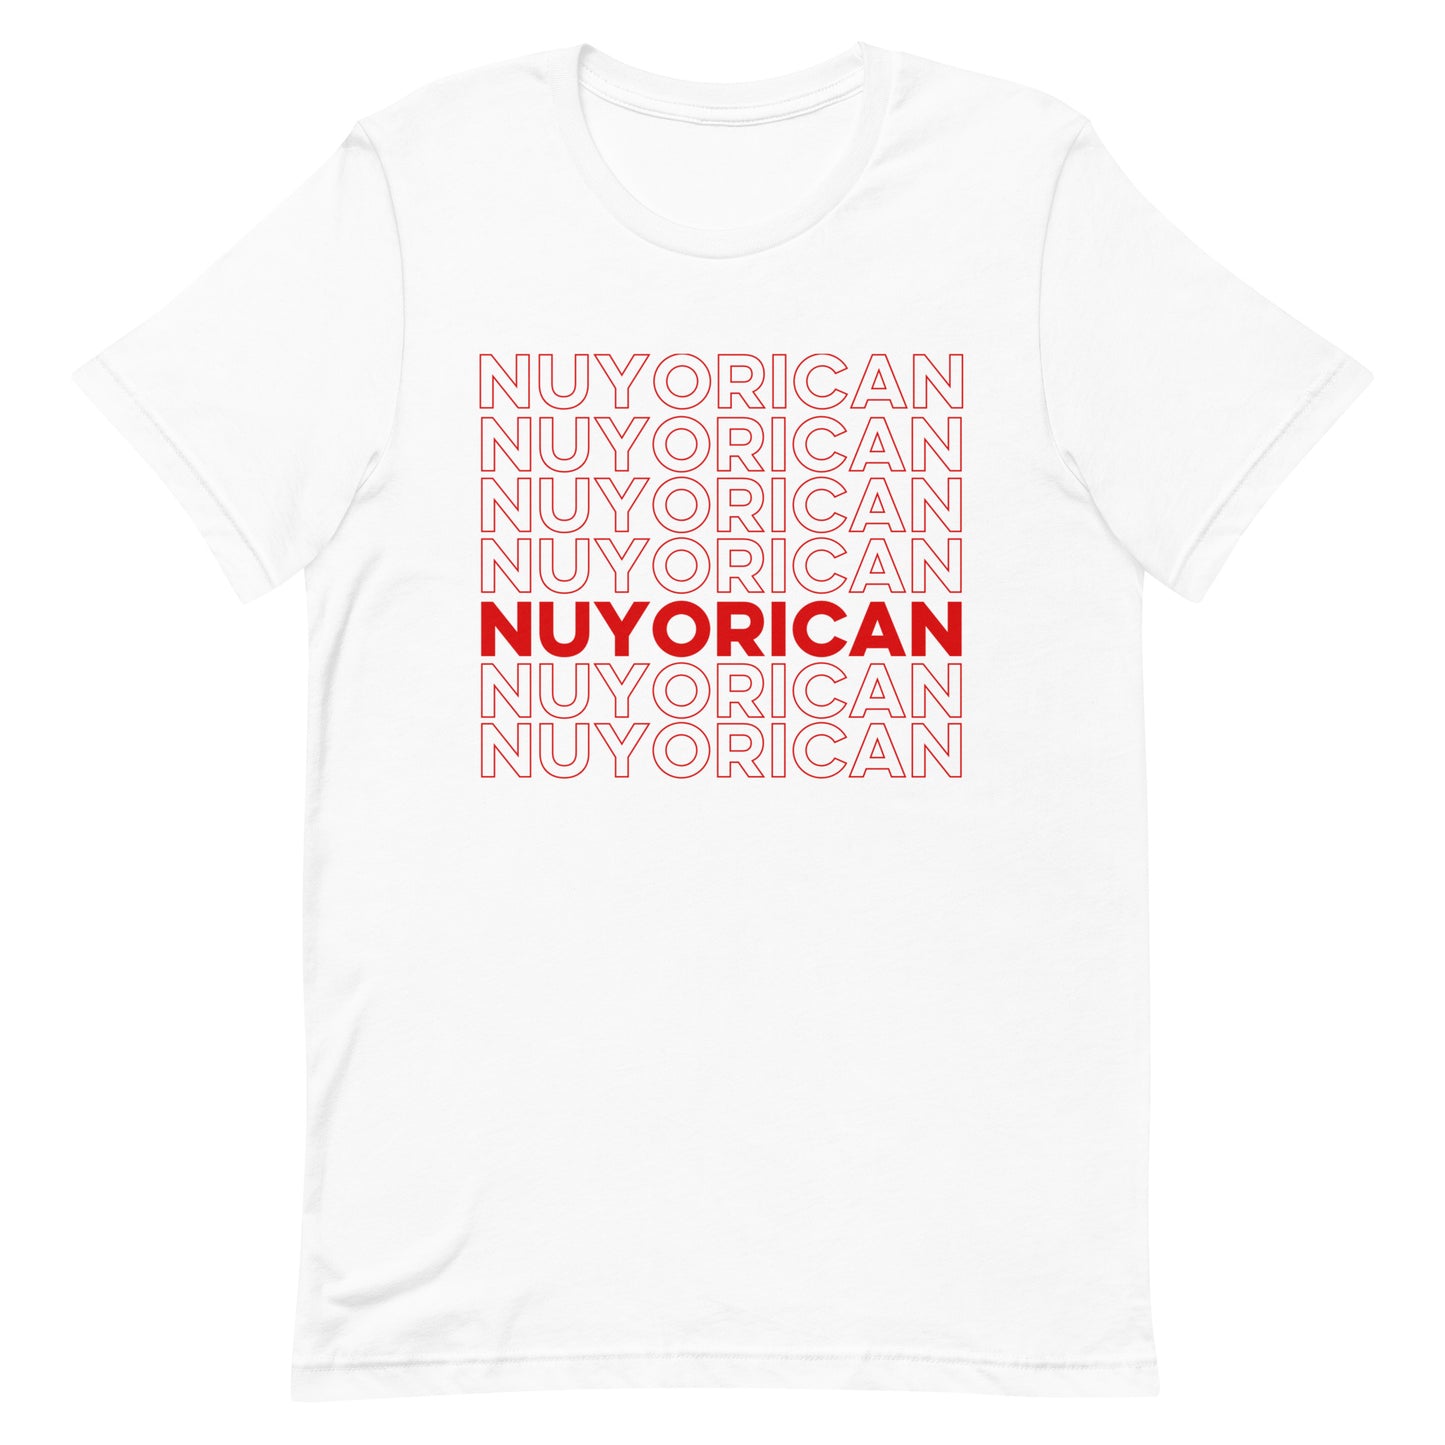 Nuyorican T-Shirt